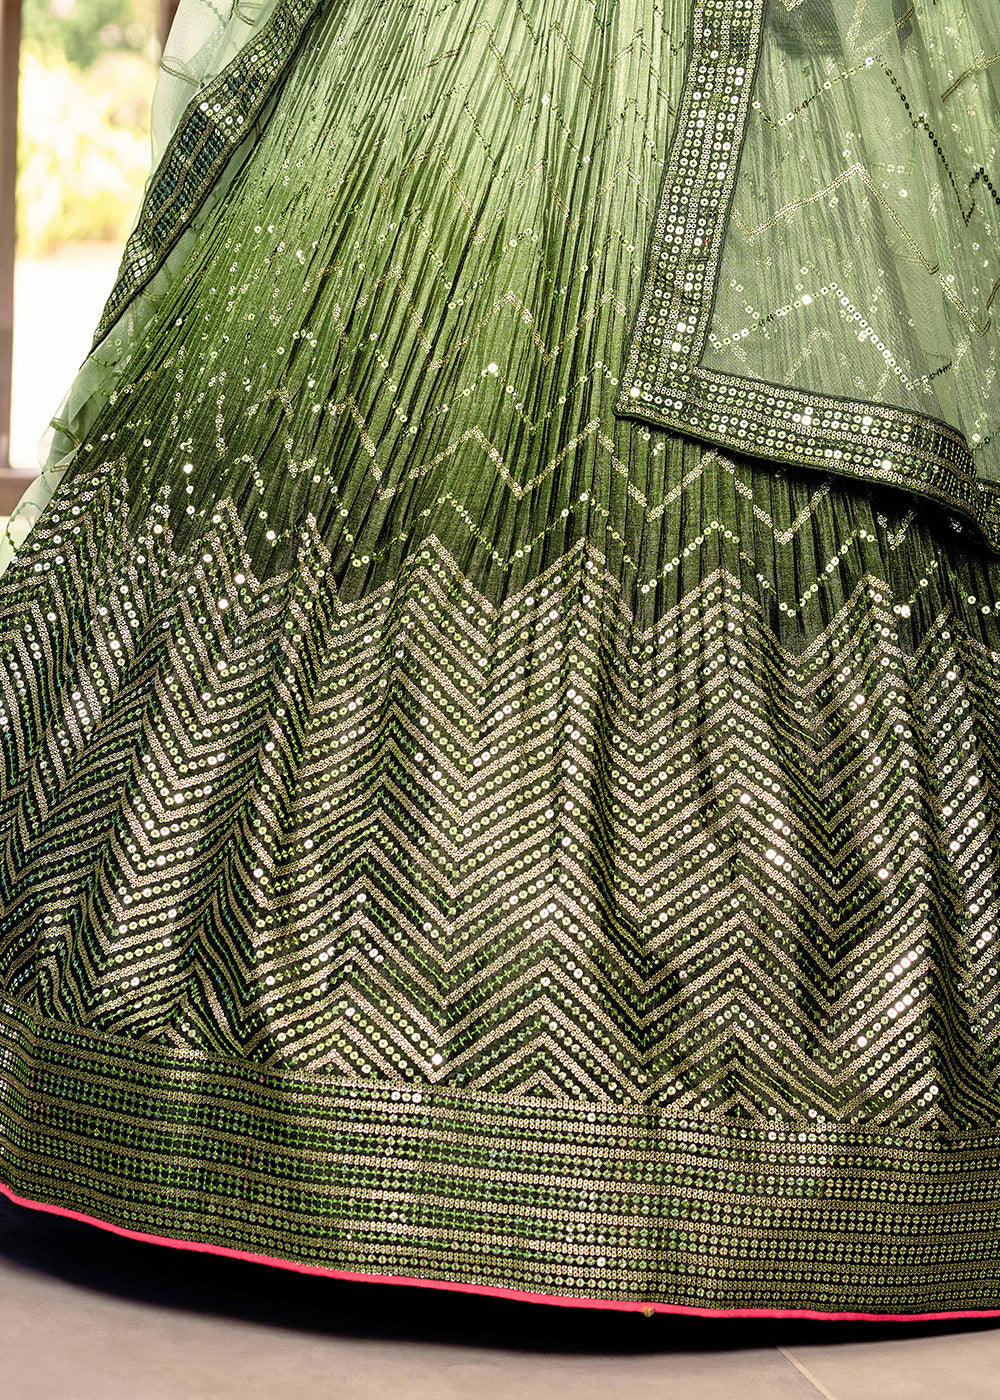 Buy Now Fabulous Green Chinnon Embroidered Haldi Lehenga Choli Online in USA, UK, Canada & Worldwide at Empress Clothing.